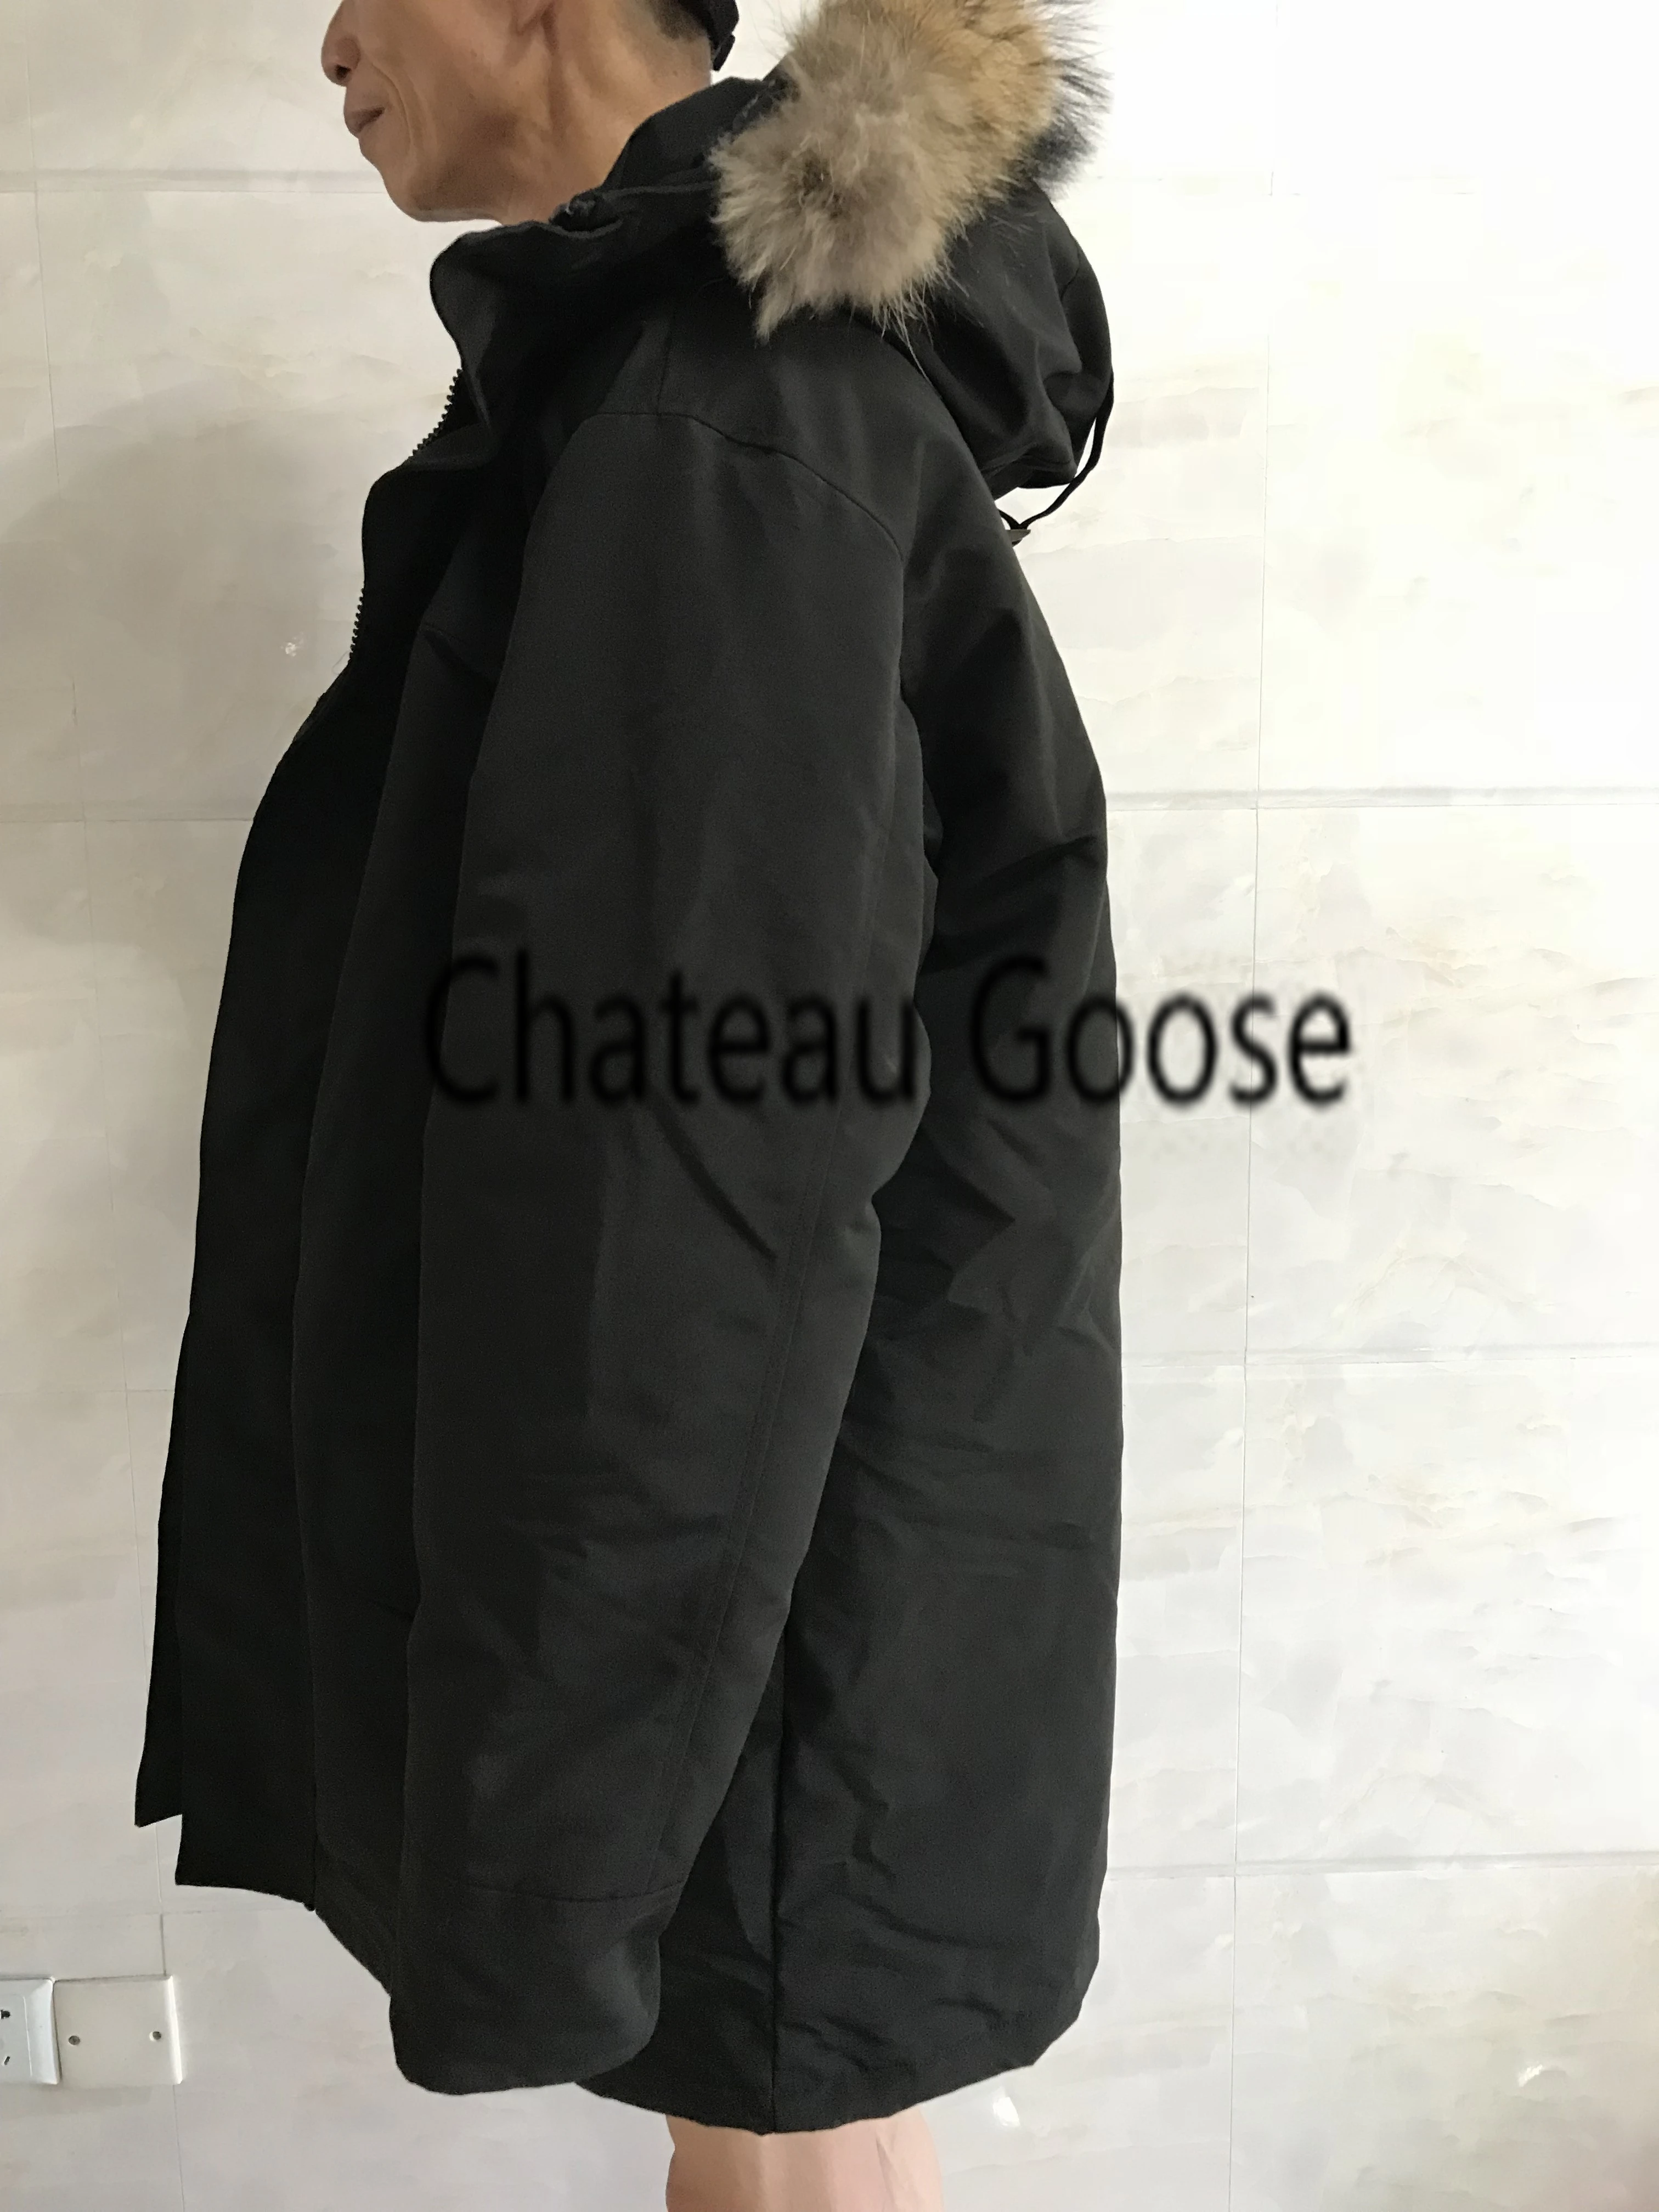 Chateau Goose Winter Fourrure Down Parka Homme Jassen Outerwear Big Fur  Hooded Fourrure Manteau Down Jacket Coat Hiver Doudoune|Down Jackets| -  AliExpress